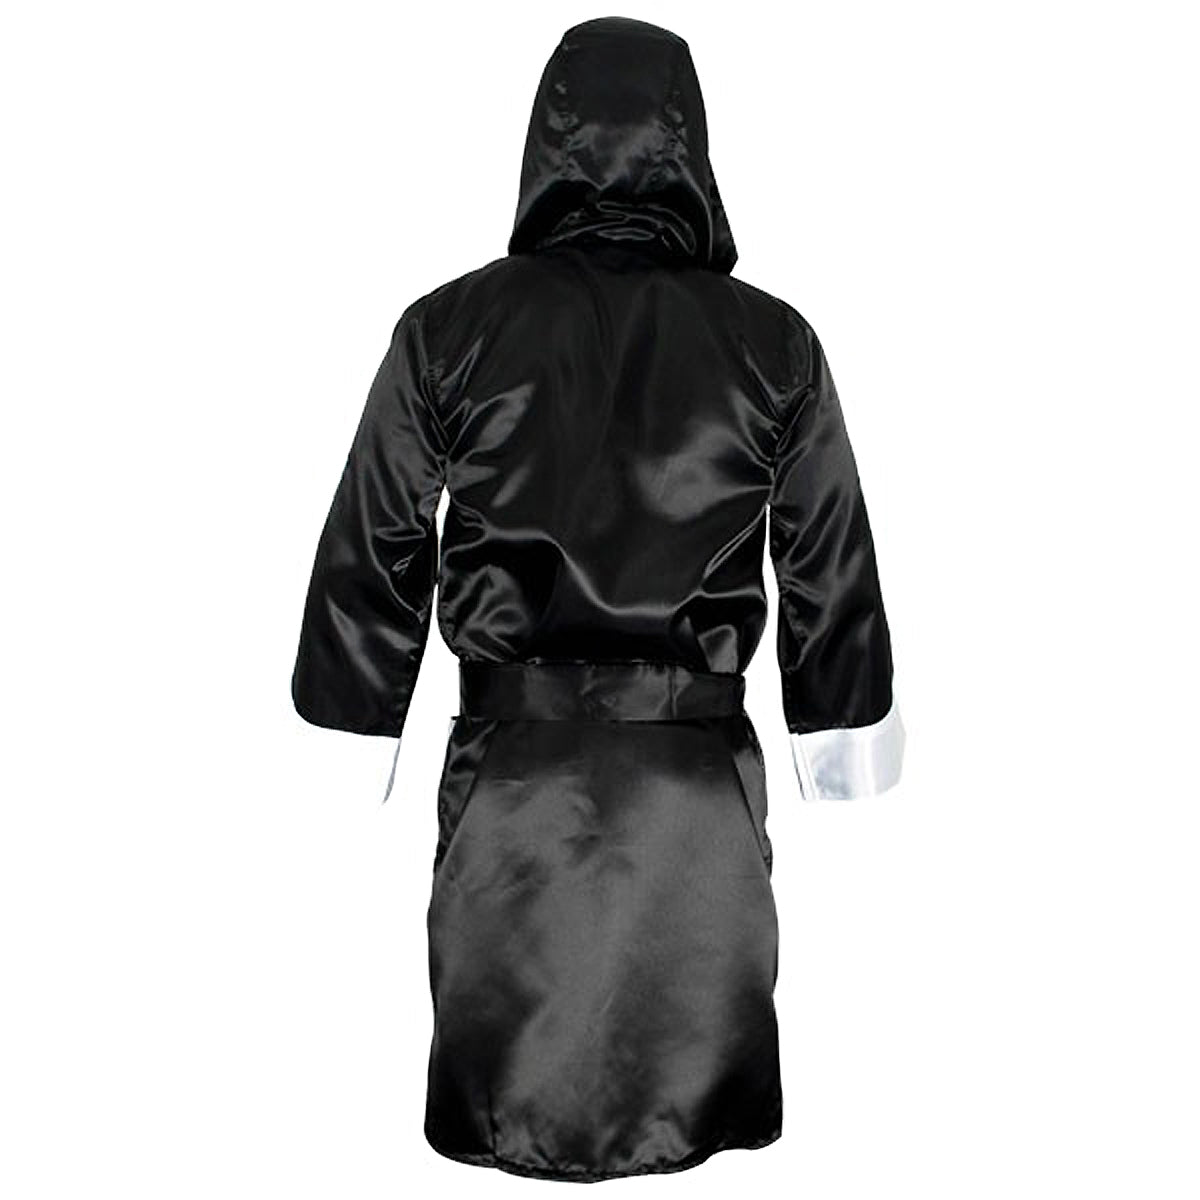 Cleto Reyes Satin Boxing Robe with Hood - Black/White Cleto Reyes